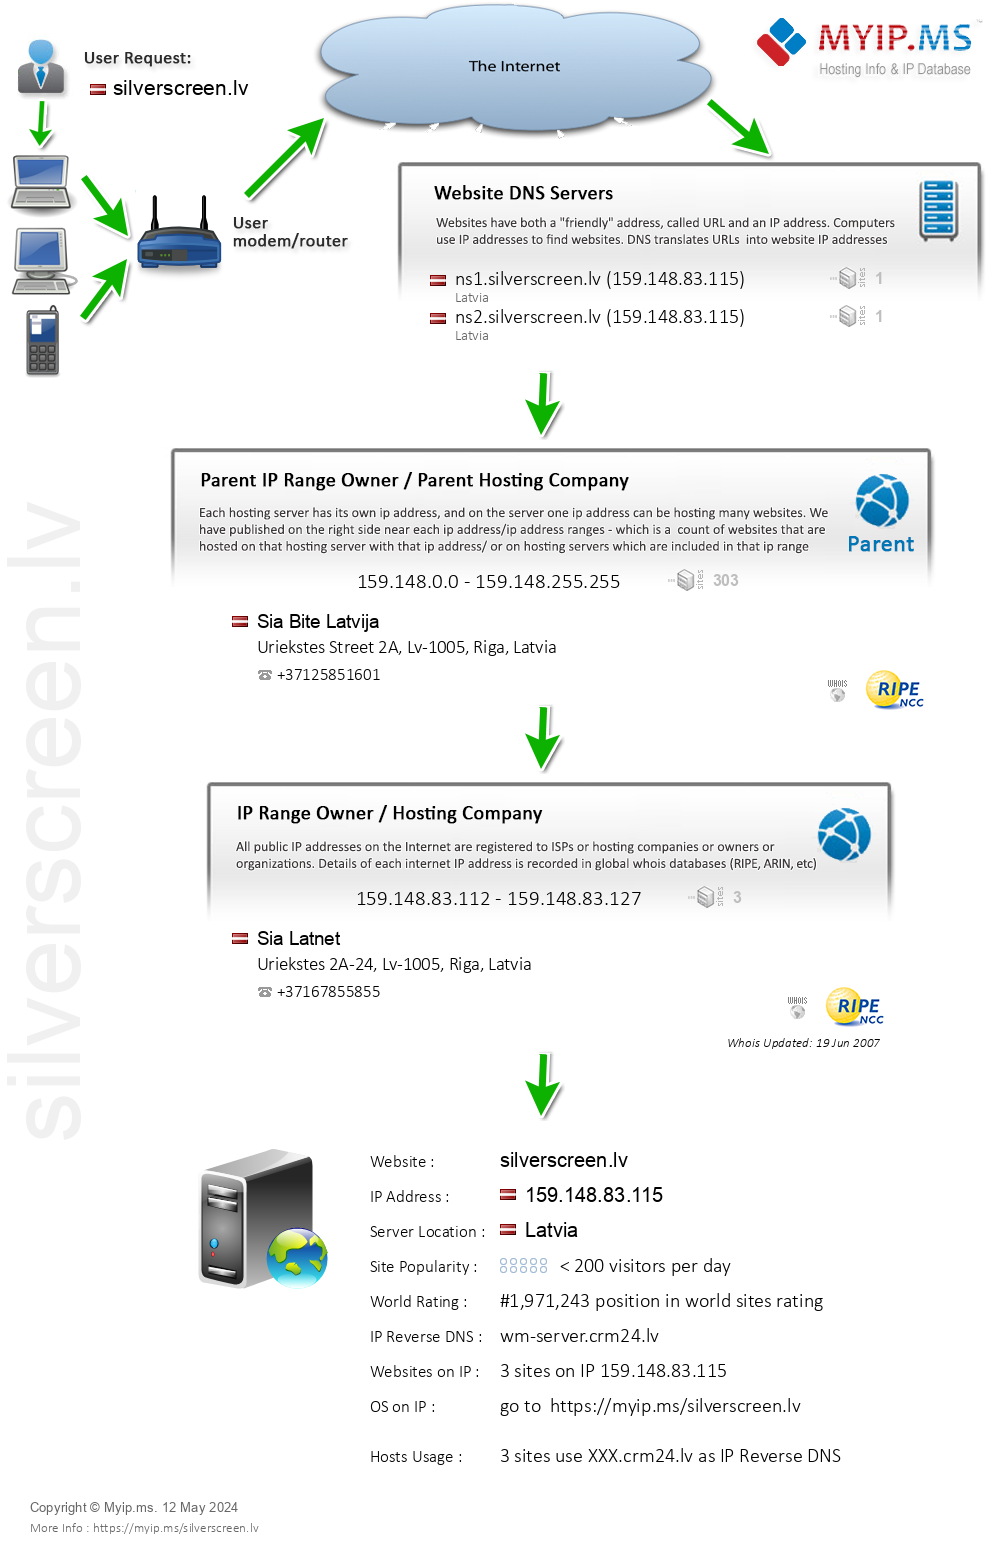 Silverscreen.lv - Website Hosting Visual IP Diagram